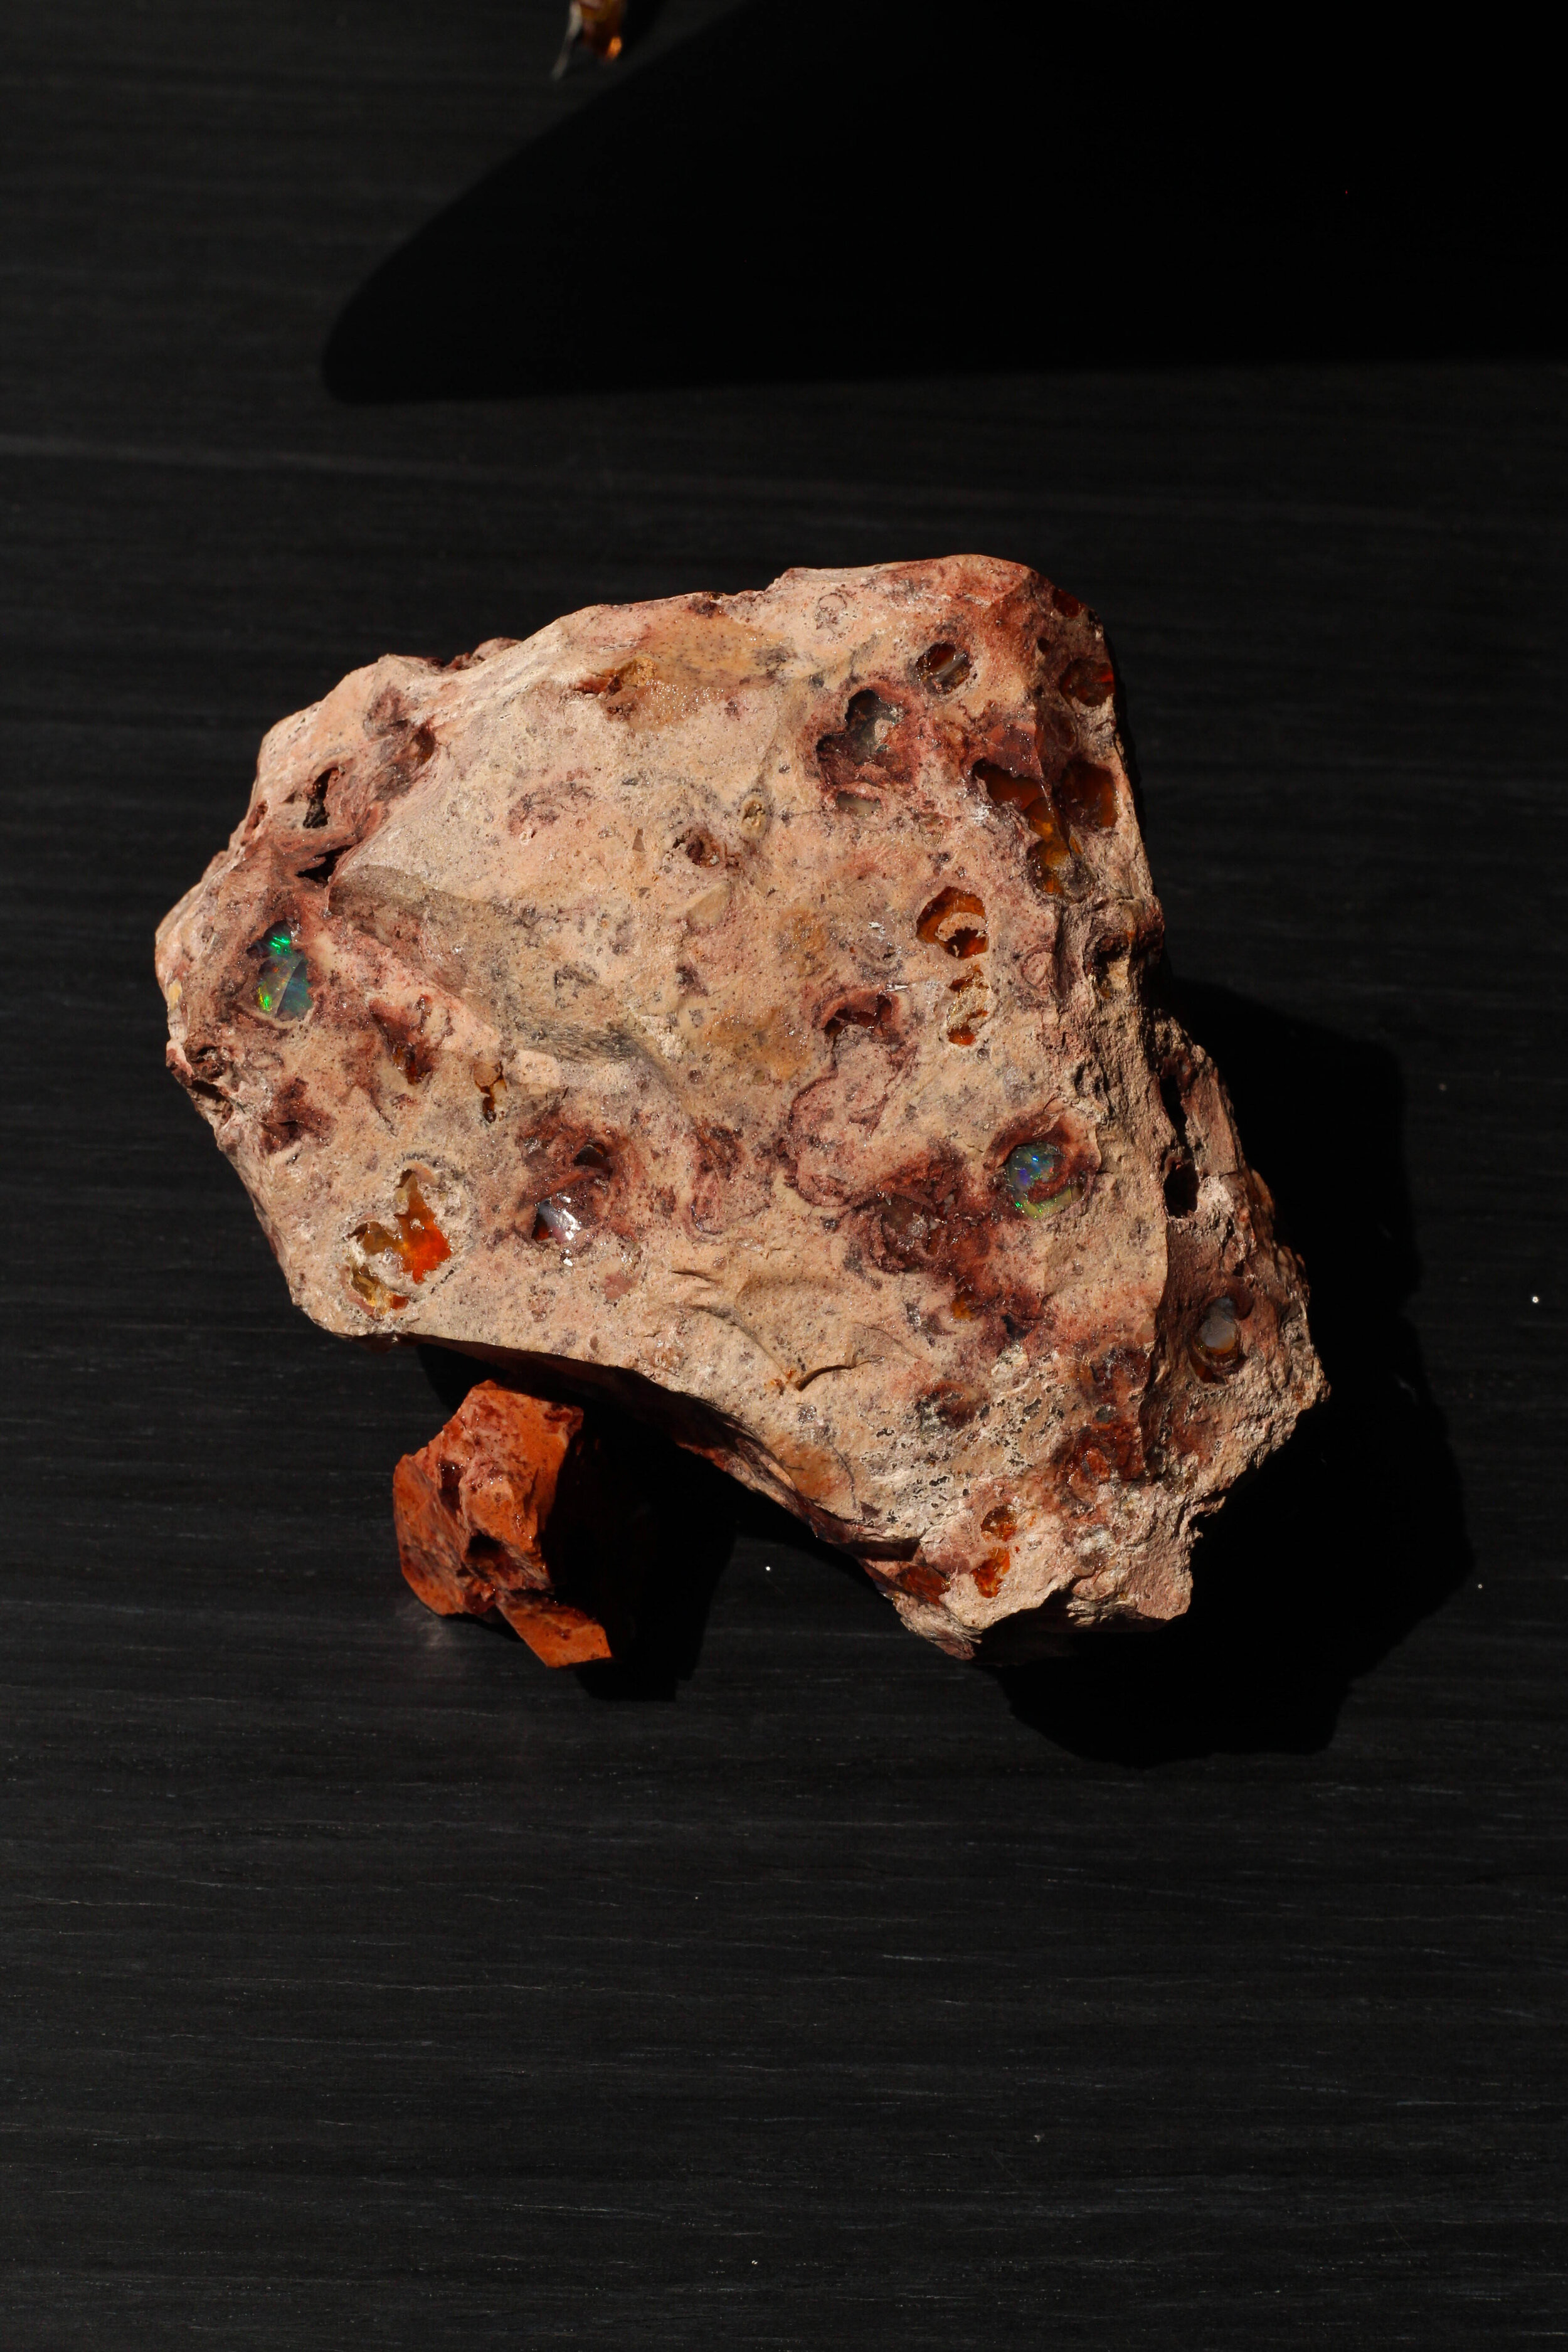 Mexican Fire Opals in rhyolite matrix